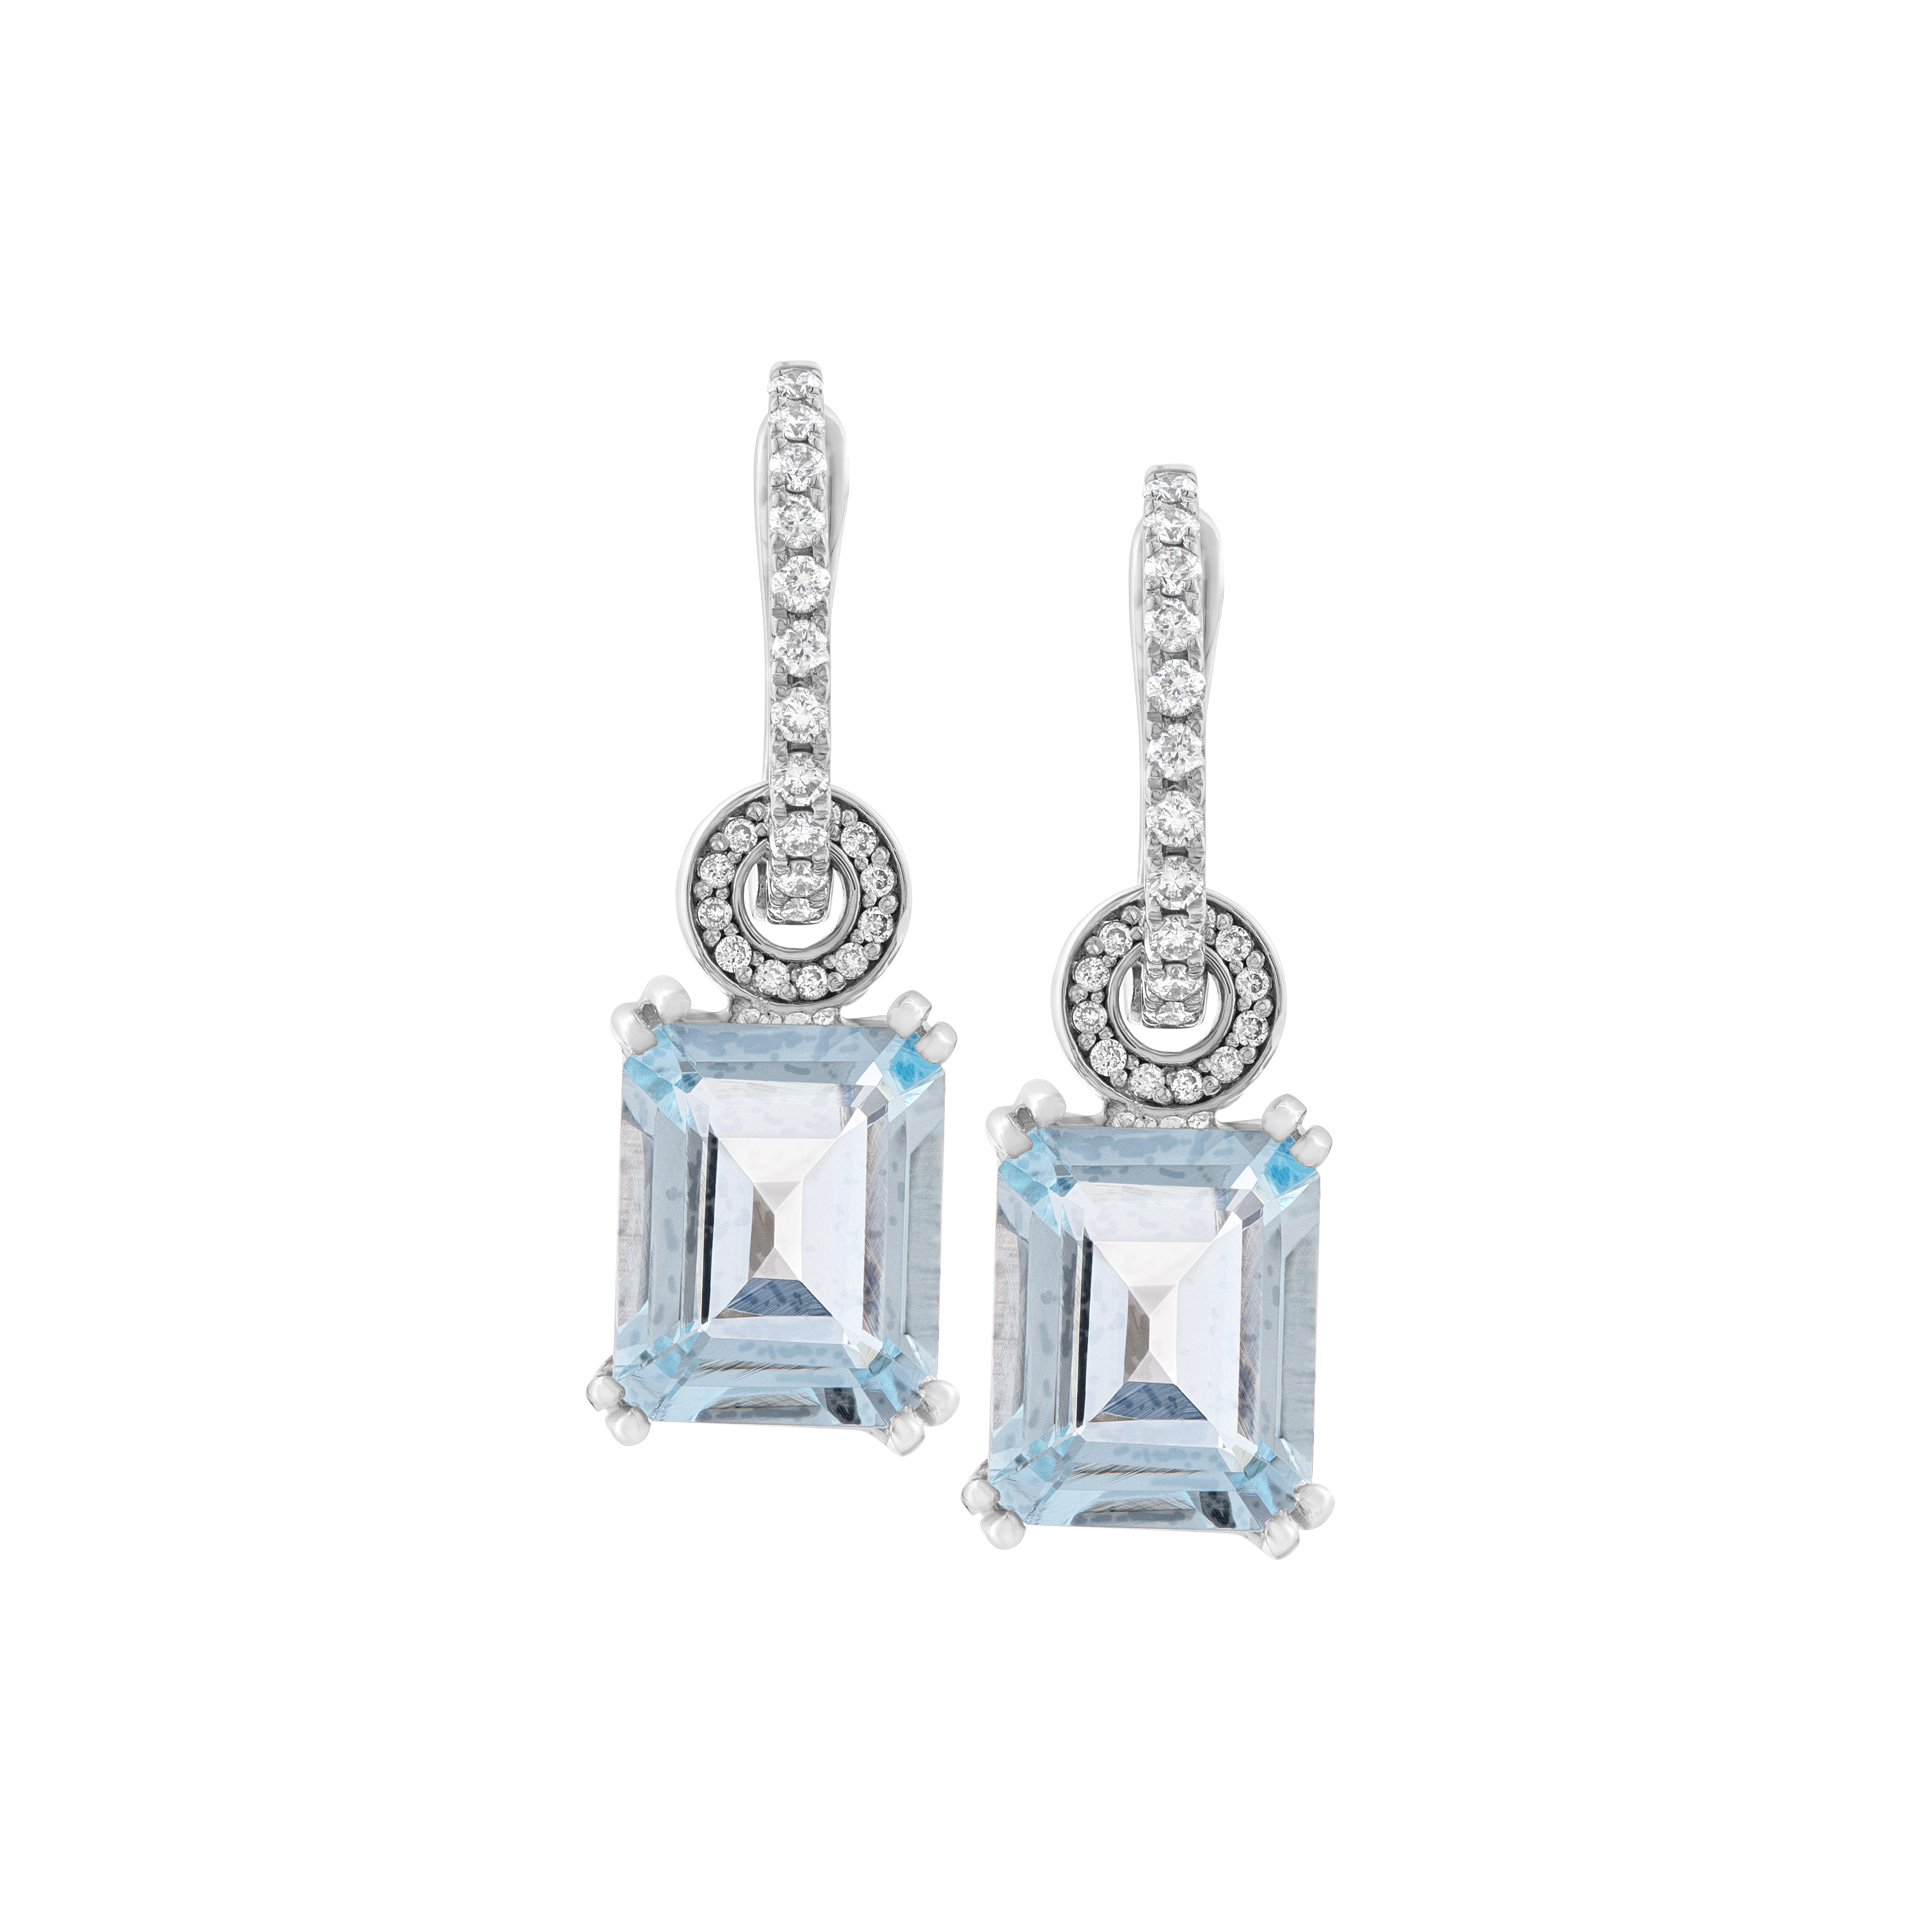 Aquamarine drop earrings with diamonds in 18K white gold